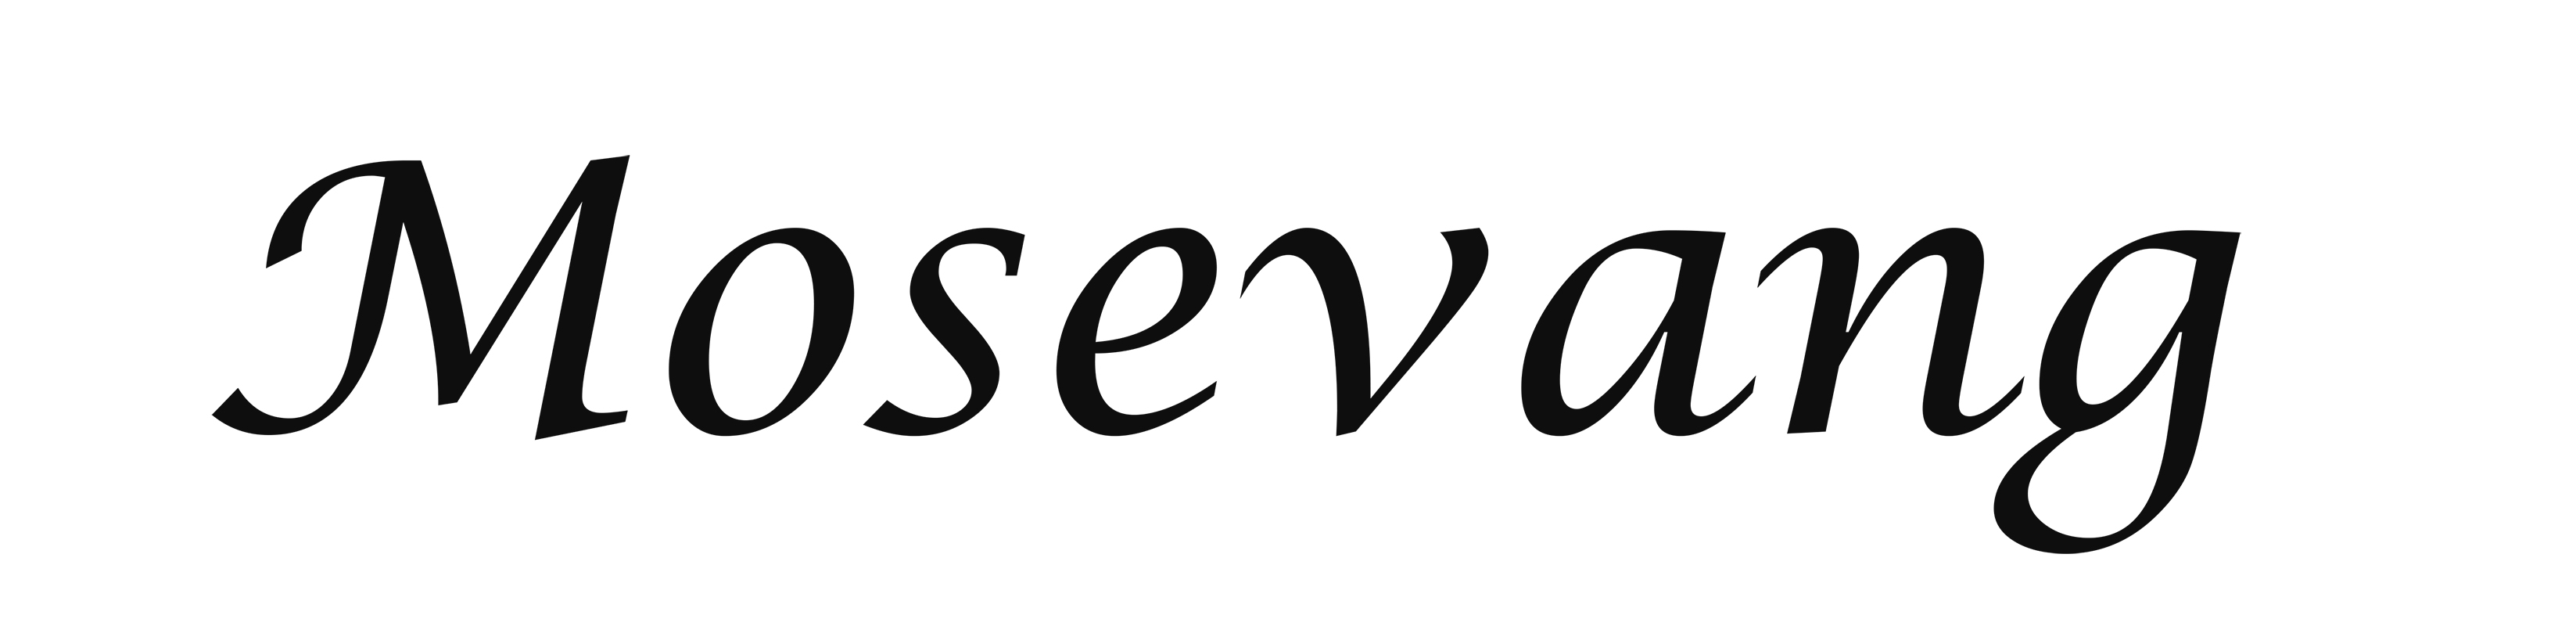 Mosevang logo